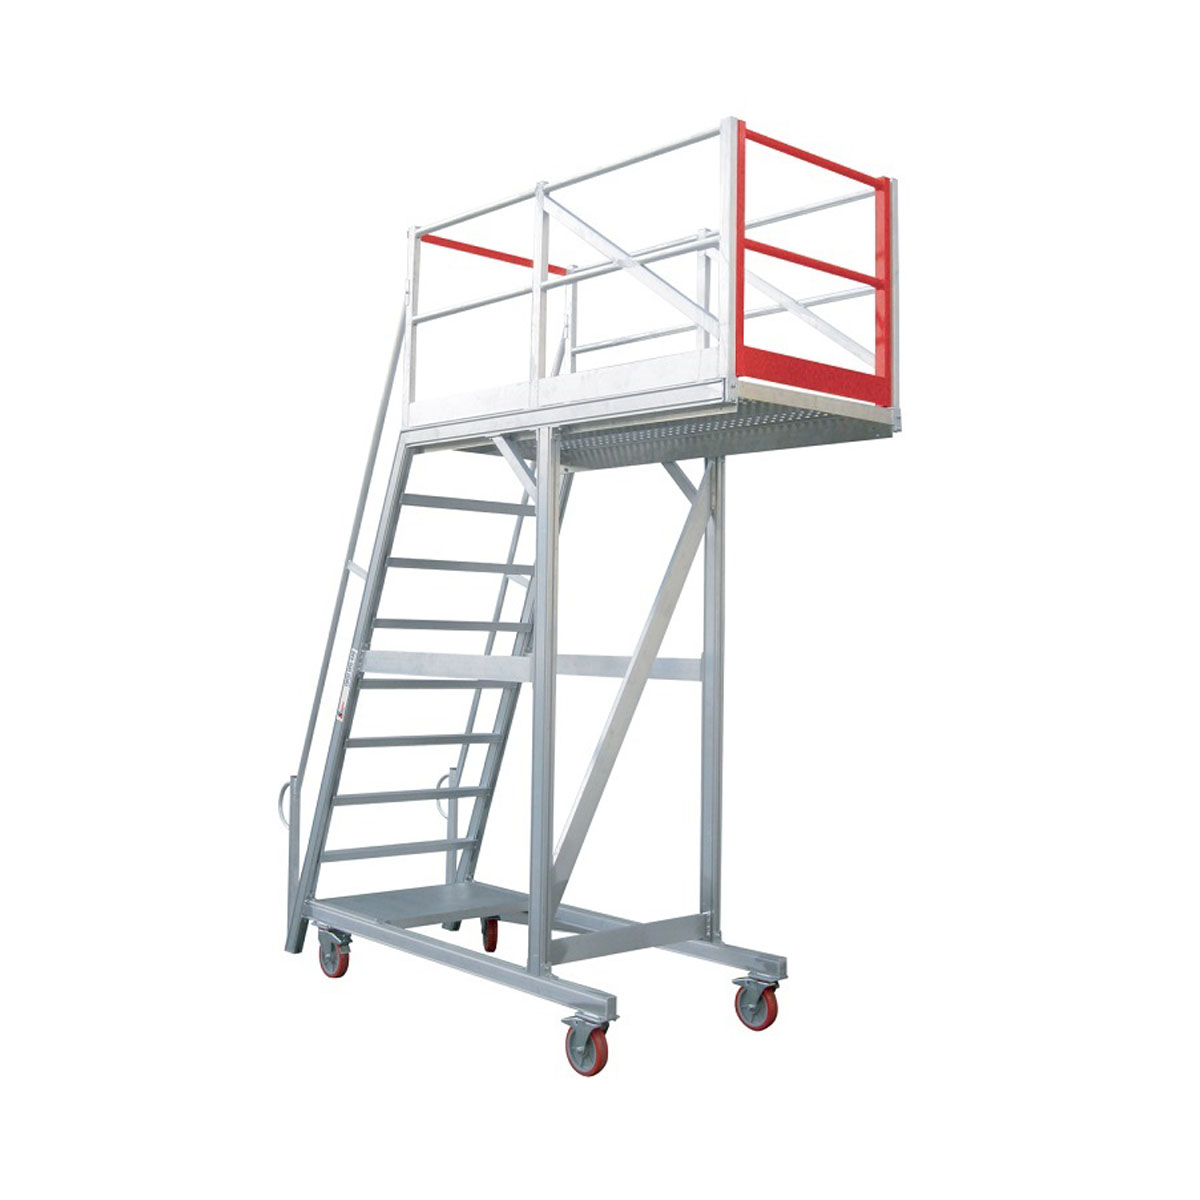 Heavy Duty Repair and Maintenance Work Platform Ladder with wheels